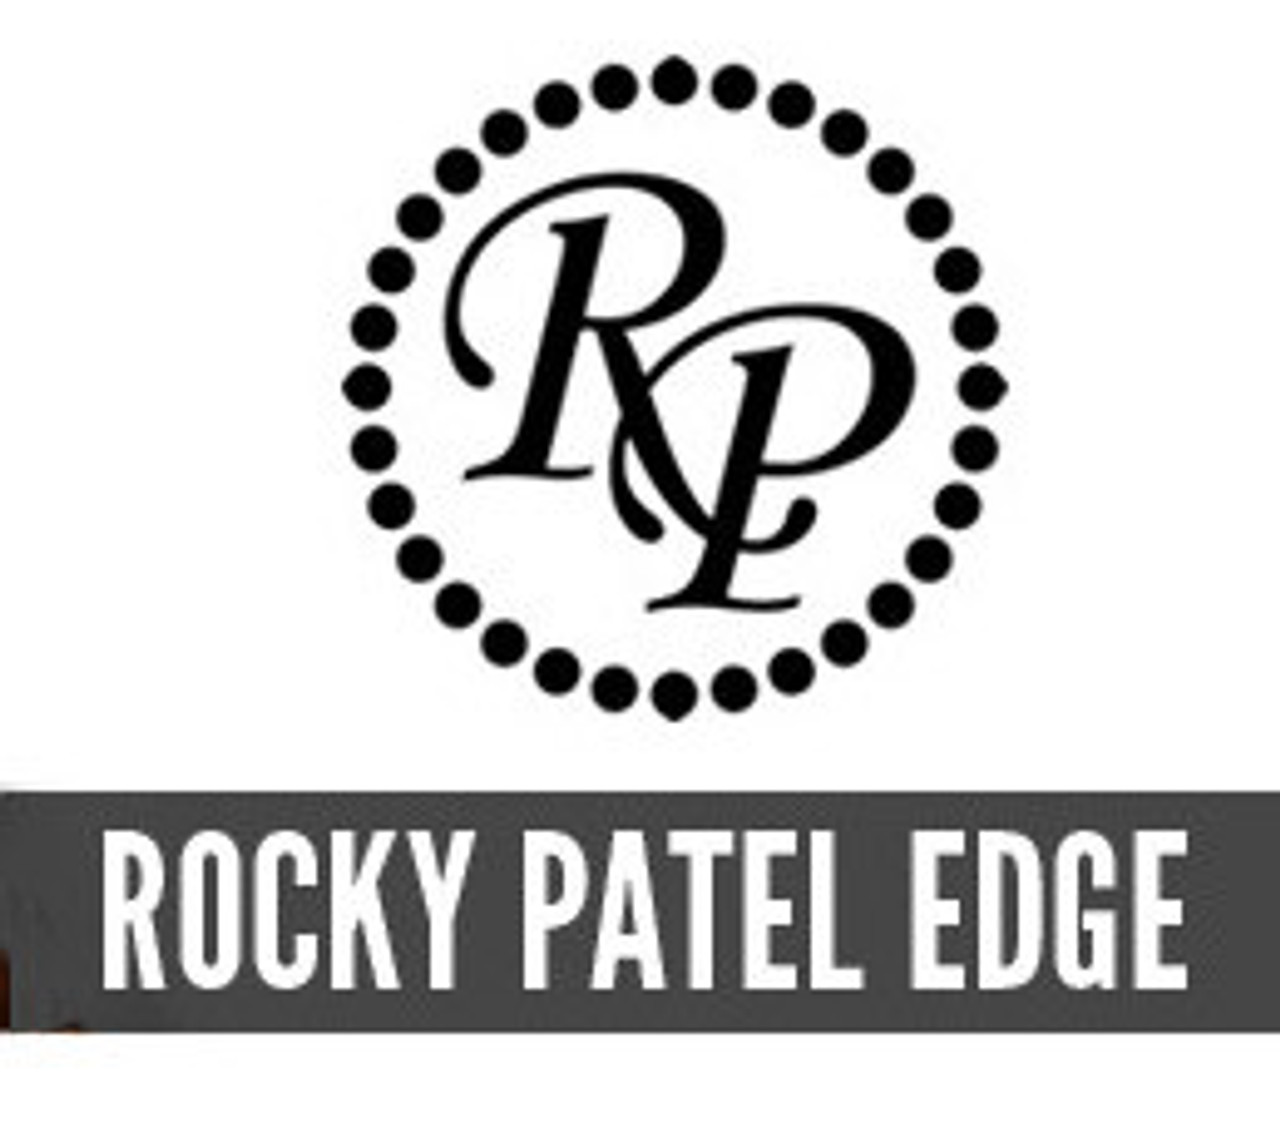 Rocky Patel The Edge Logo